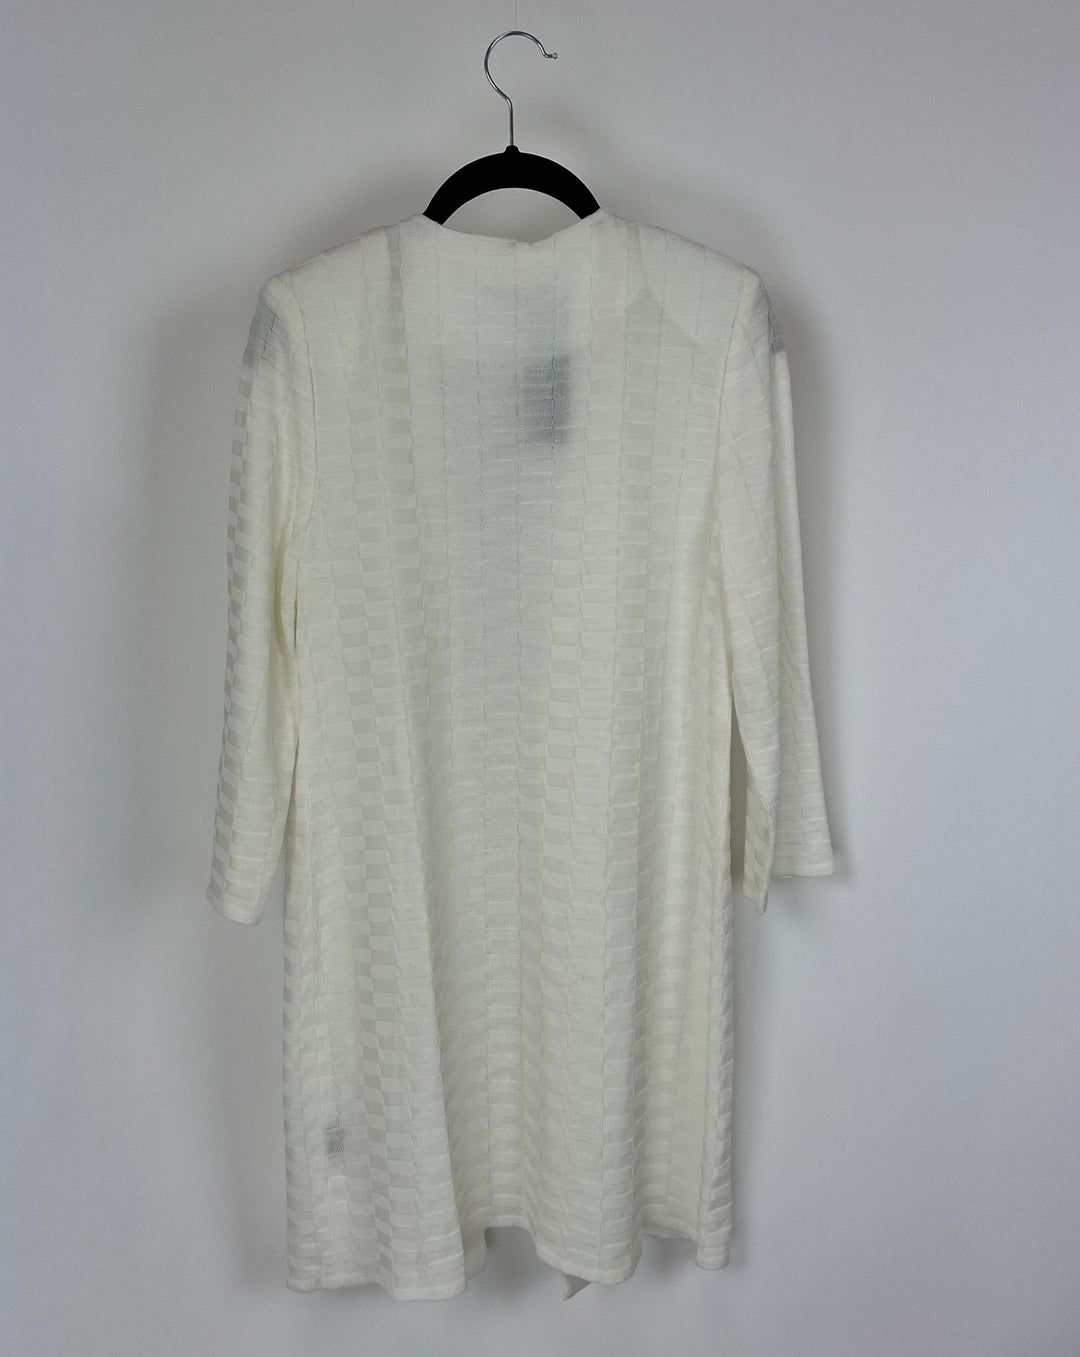 White Textured Cardigan - Size 2-4